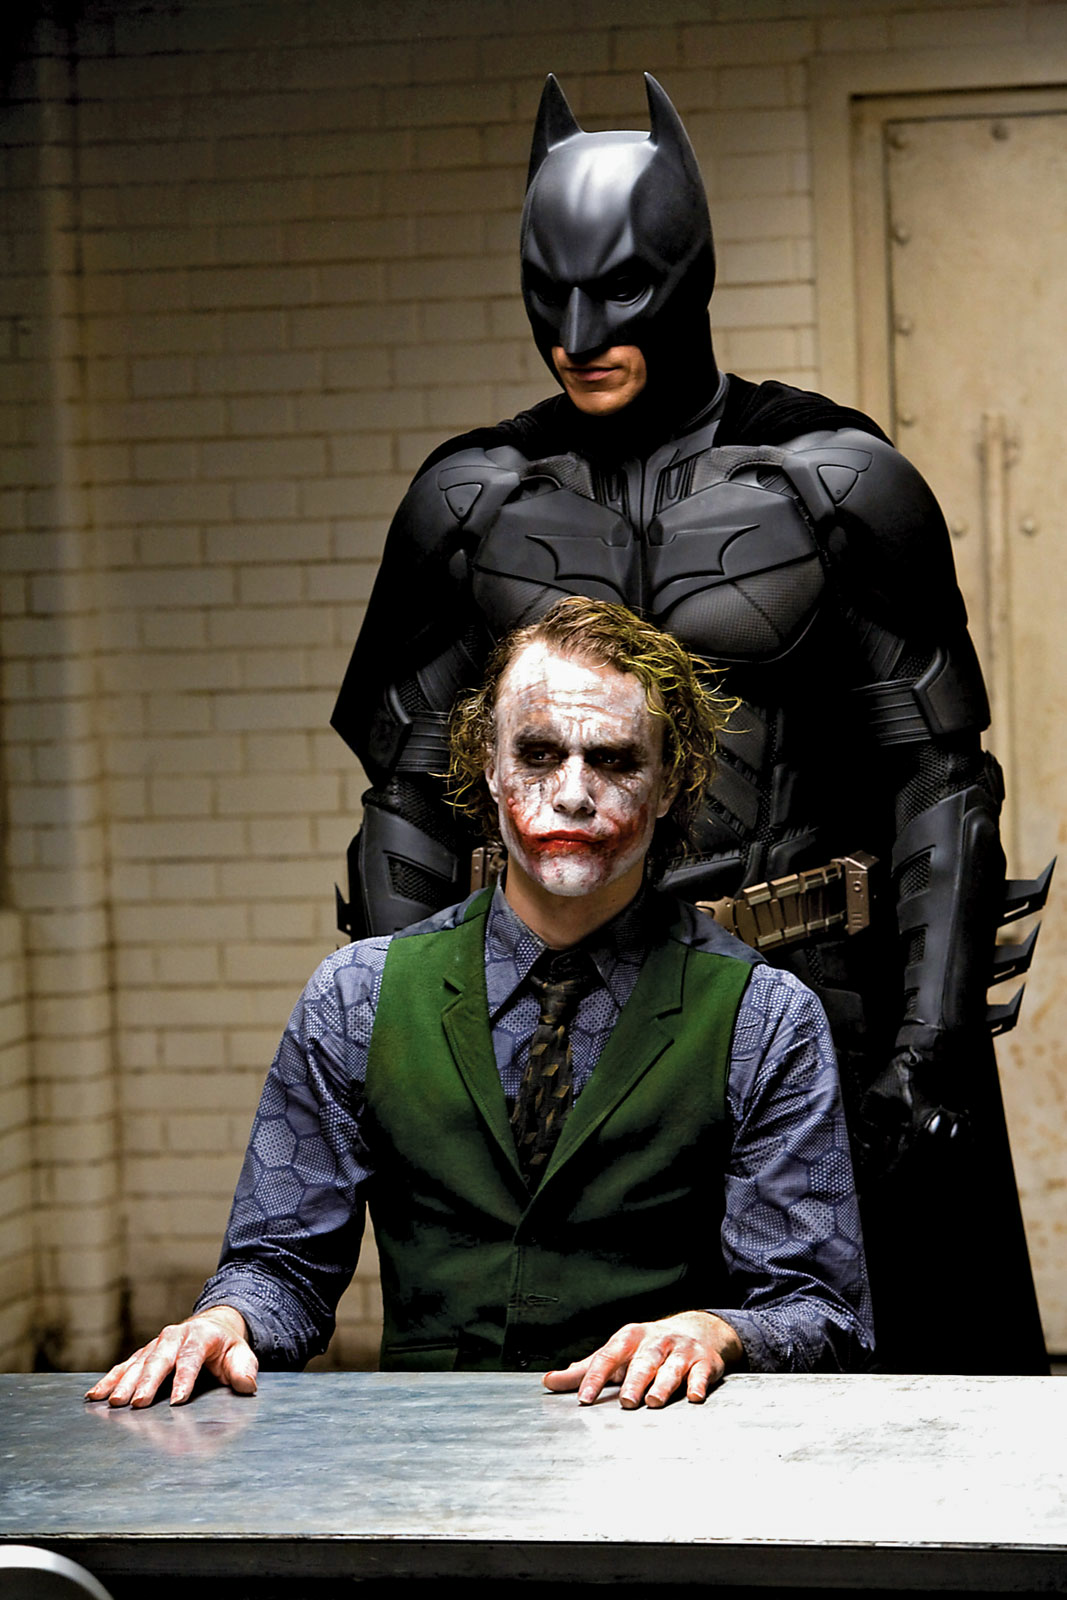 Dark Knight Rises Batman and Joker interrogation scene Meme Generator -  Imgflip